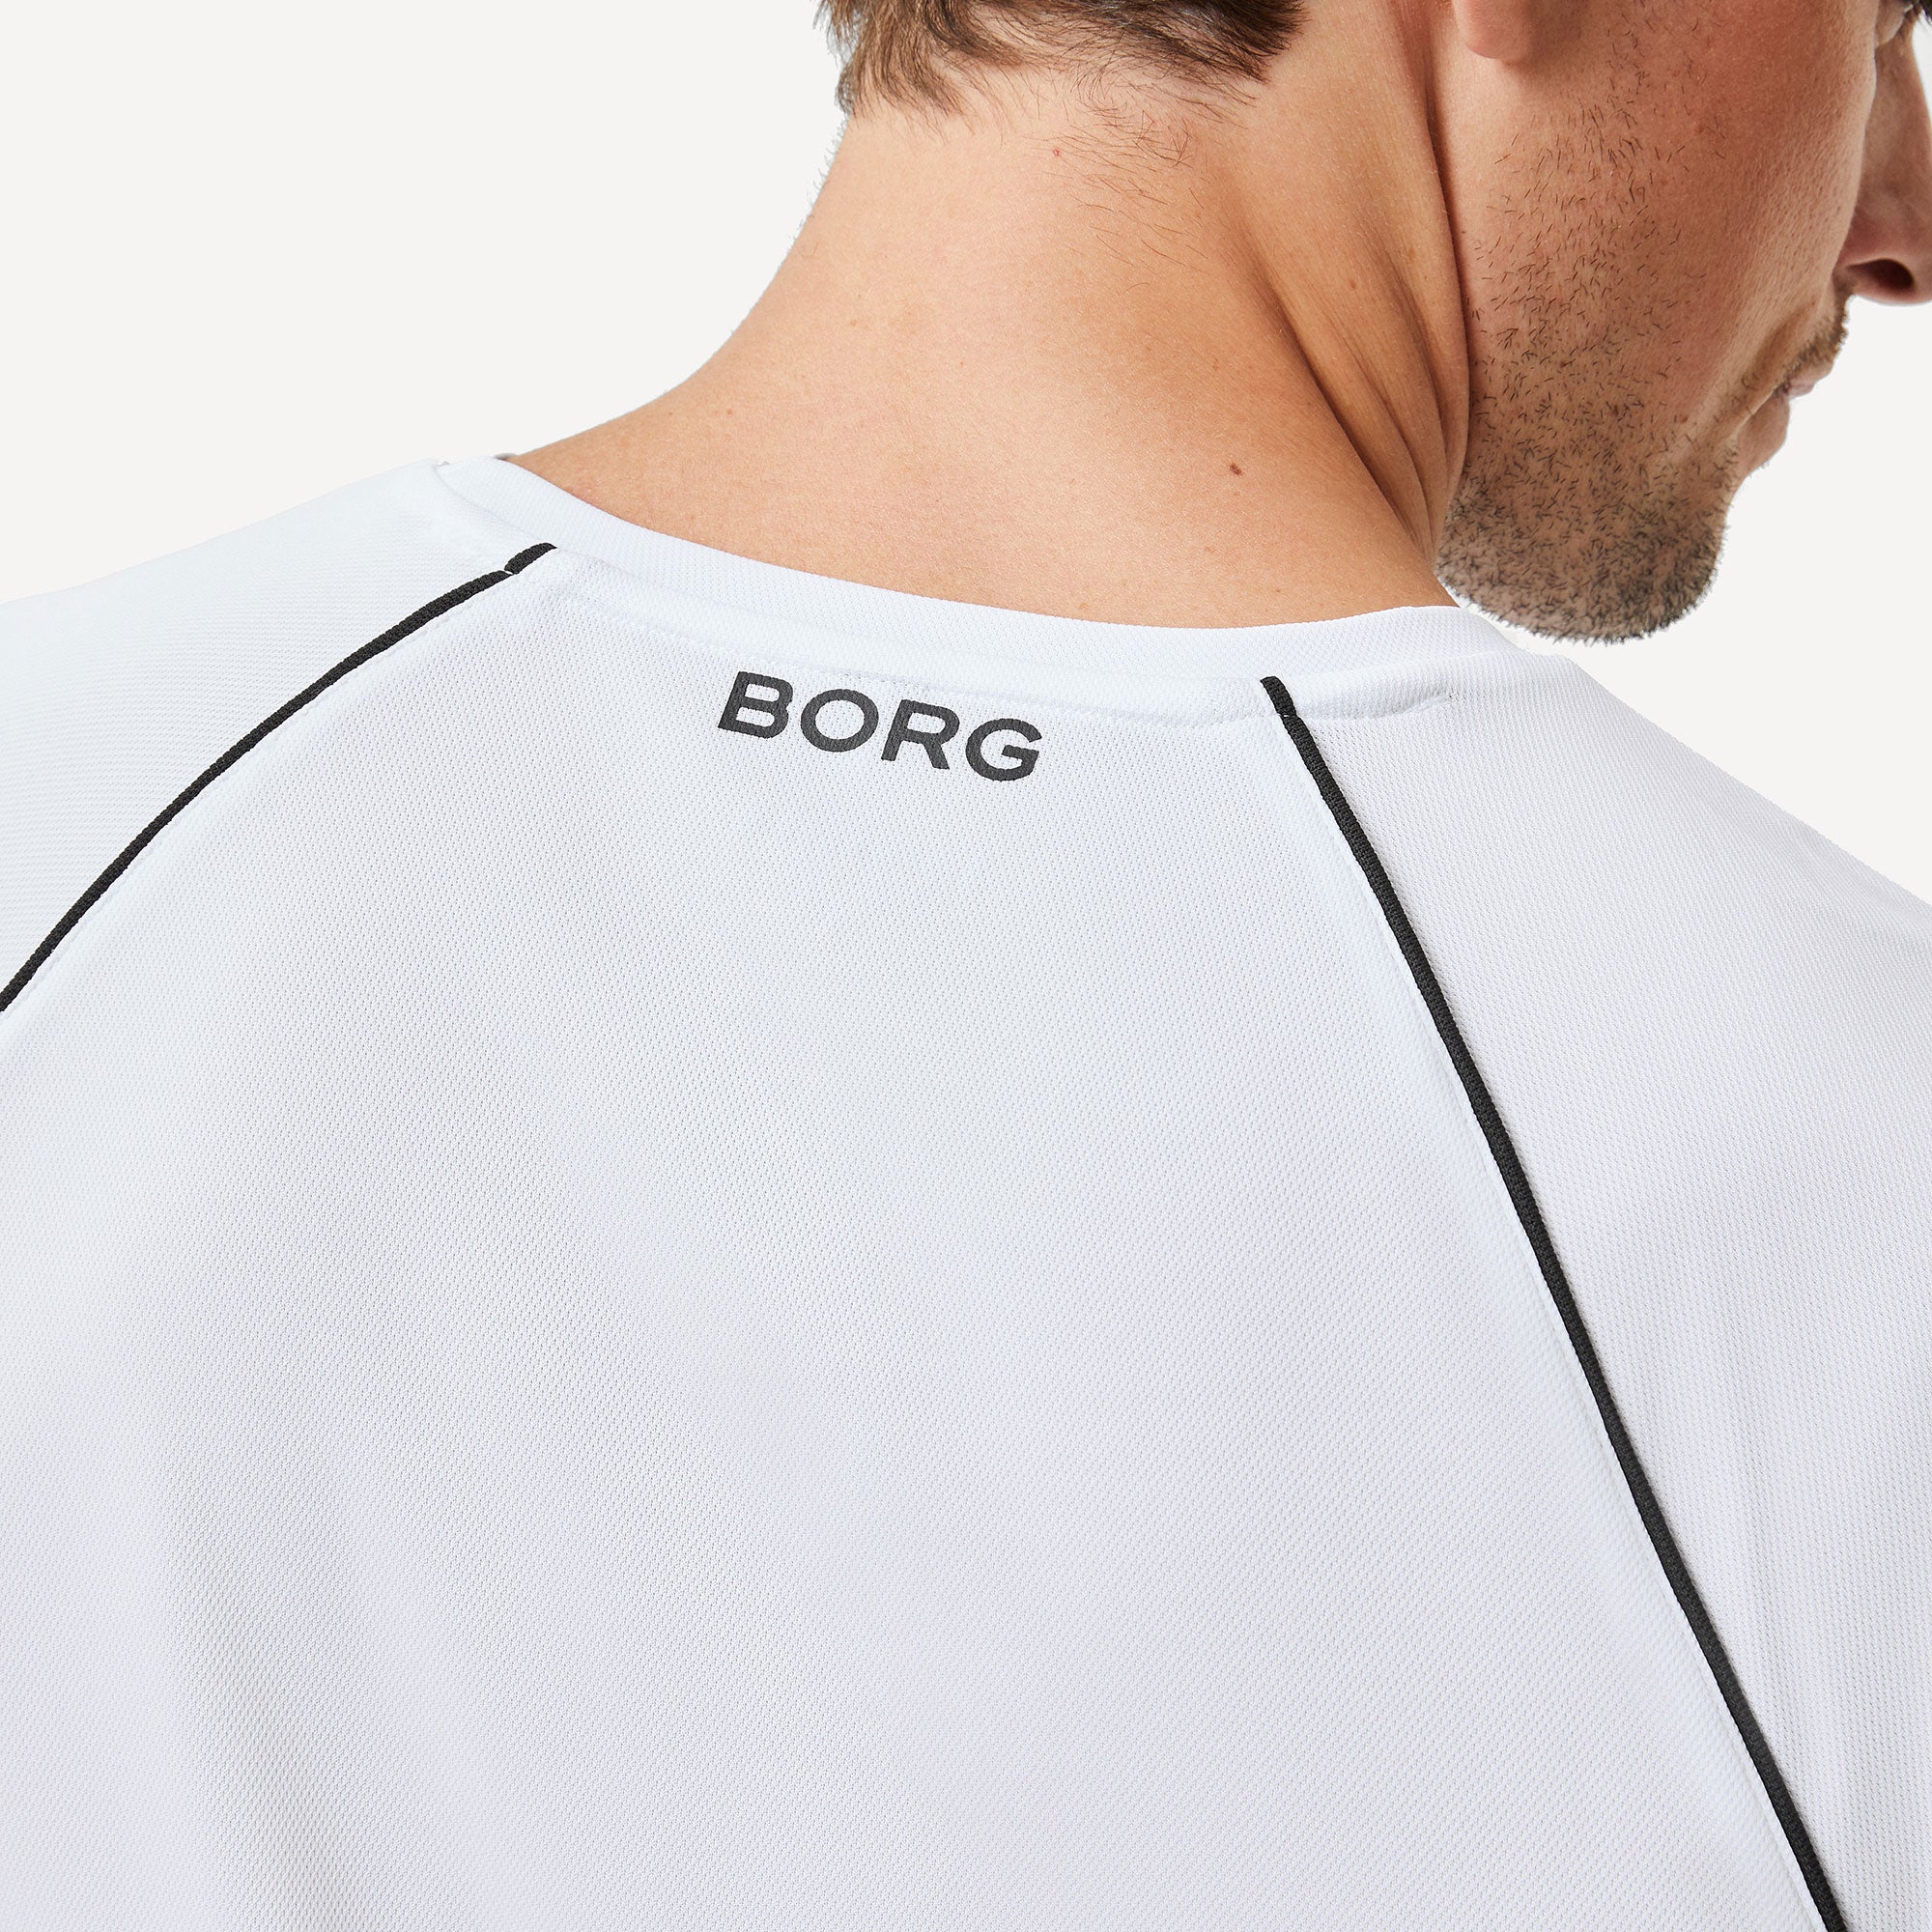 Björn Borg Ace Racquet Men's Tennis Shirt - White (4)